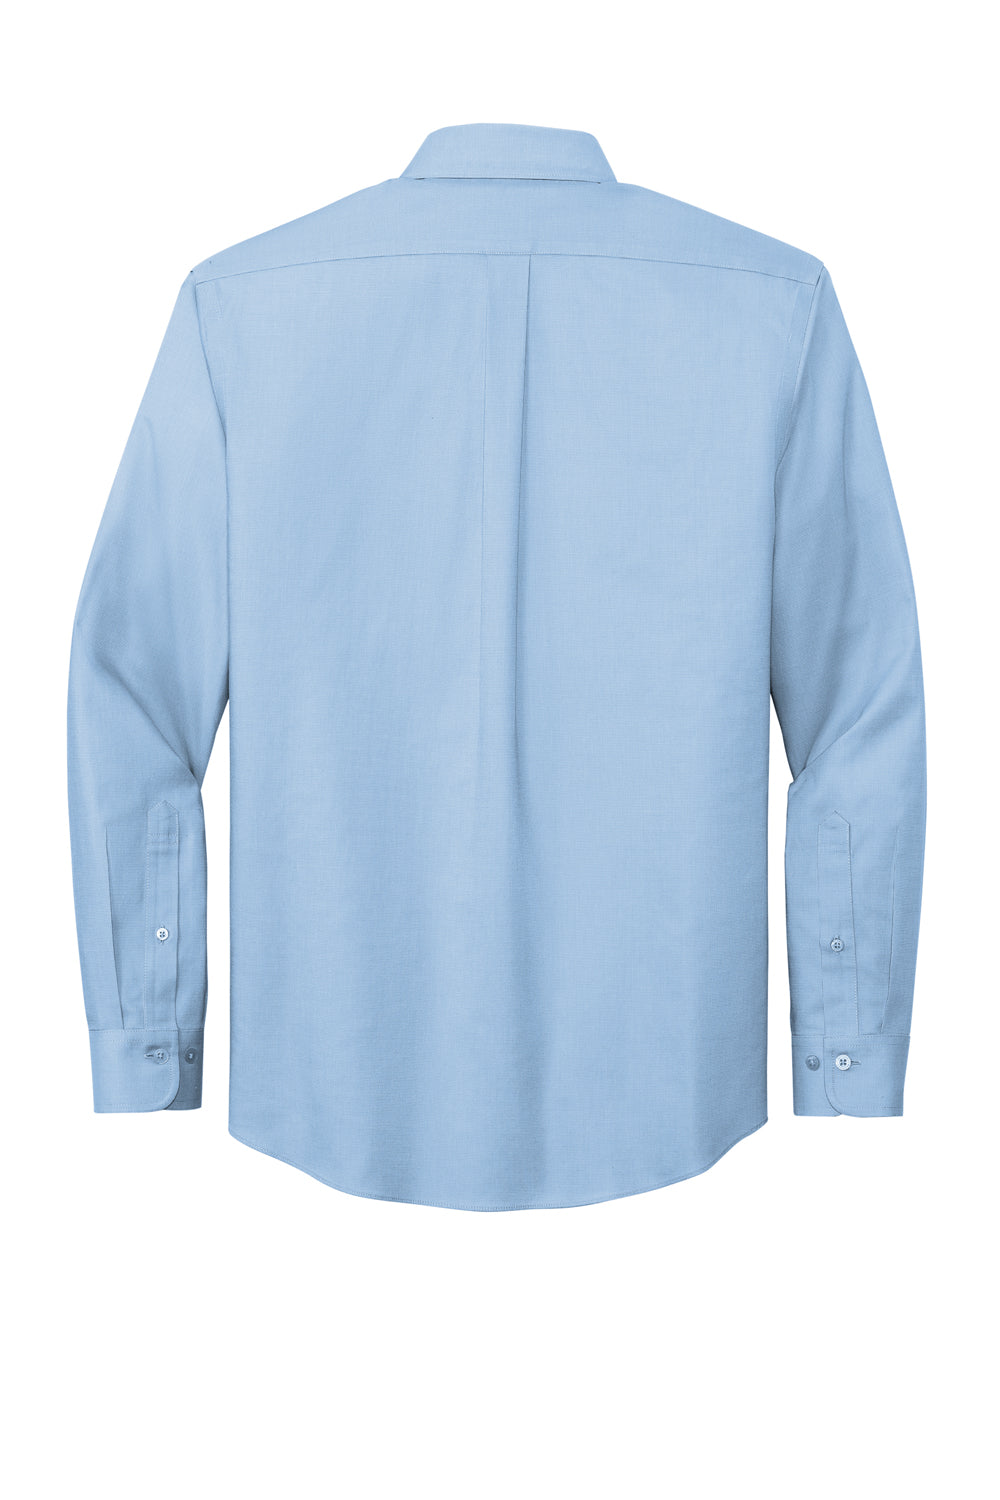 Brooks Brothers Mens Wrinkle Resistant Nailhead Long Sleeve Button Down Shirt w/ Pocket Newport Blue Flat Back